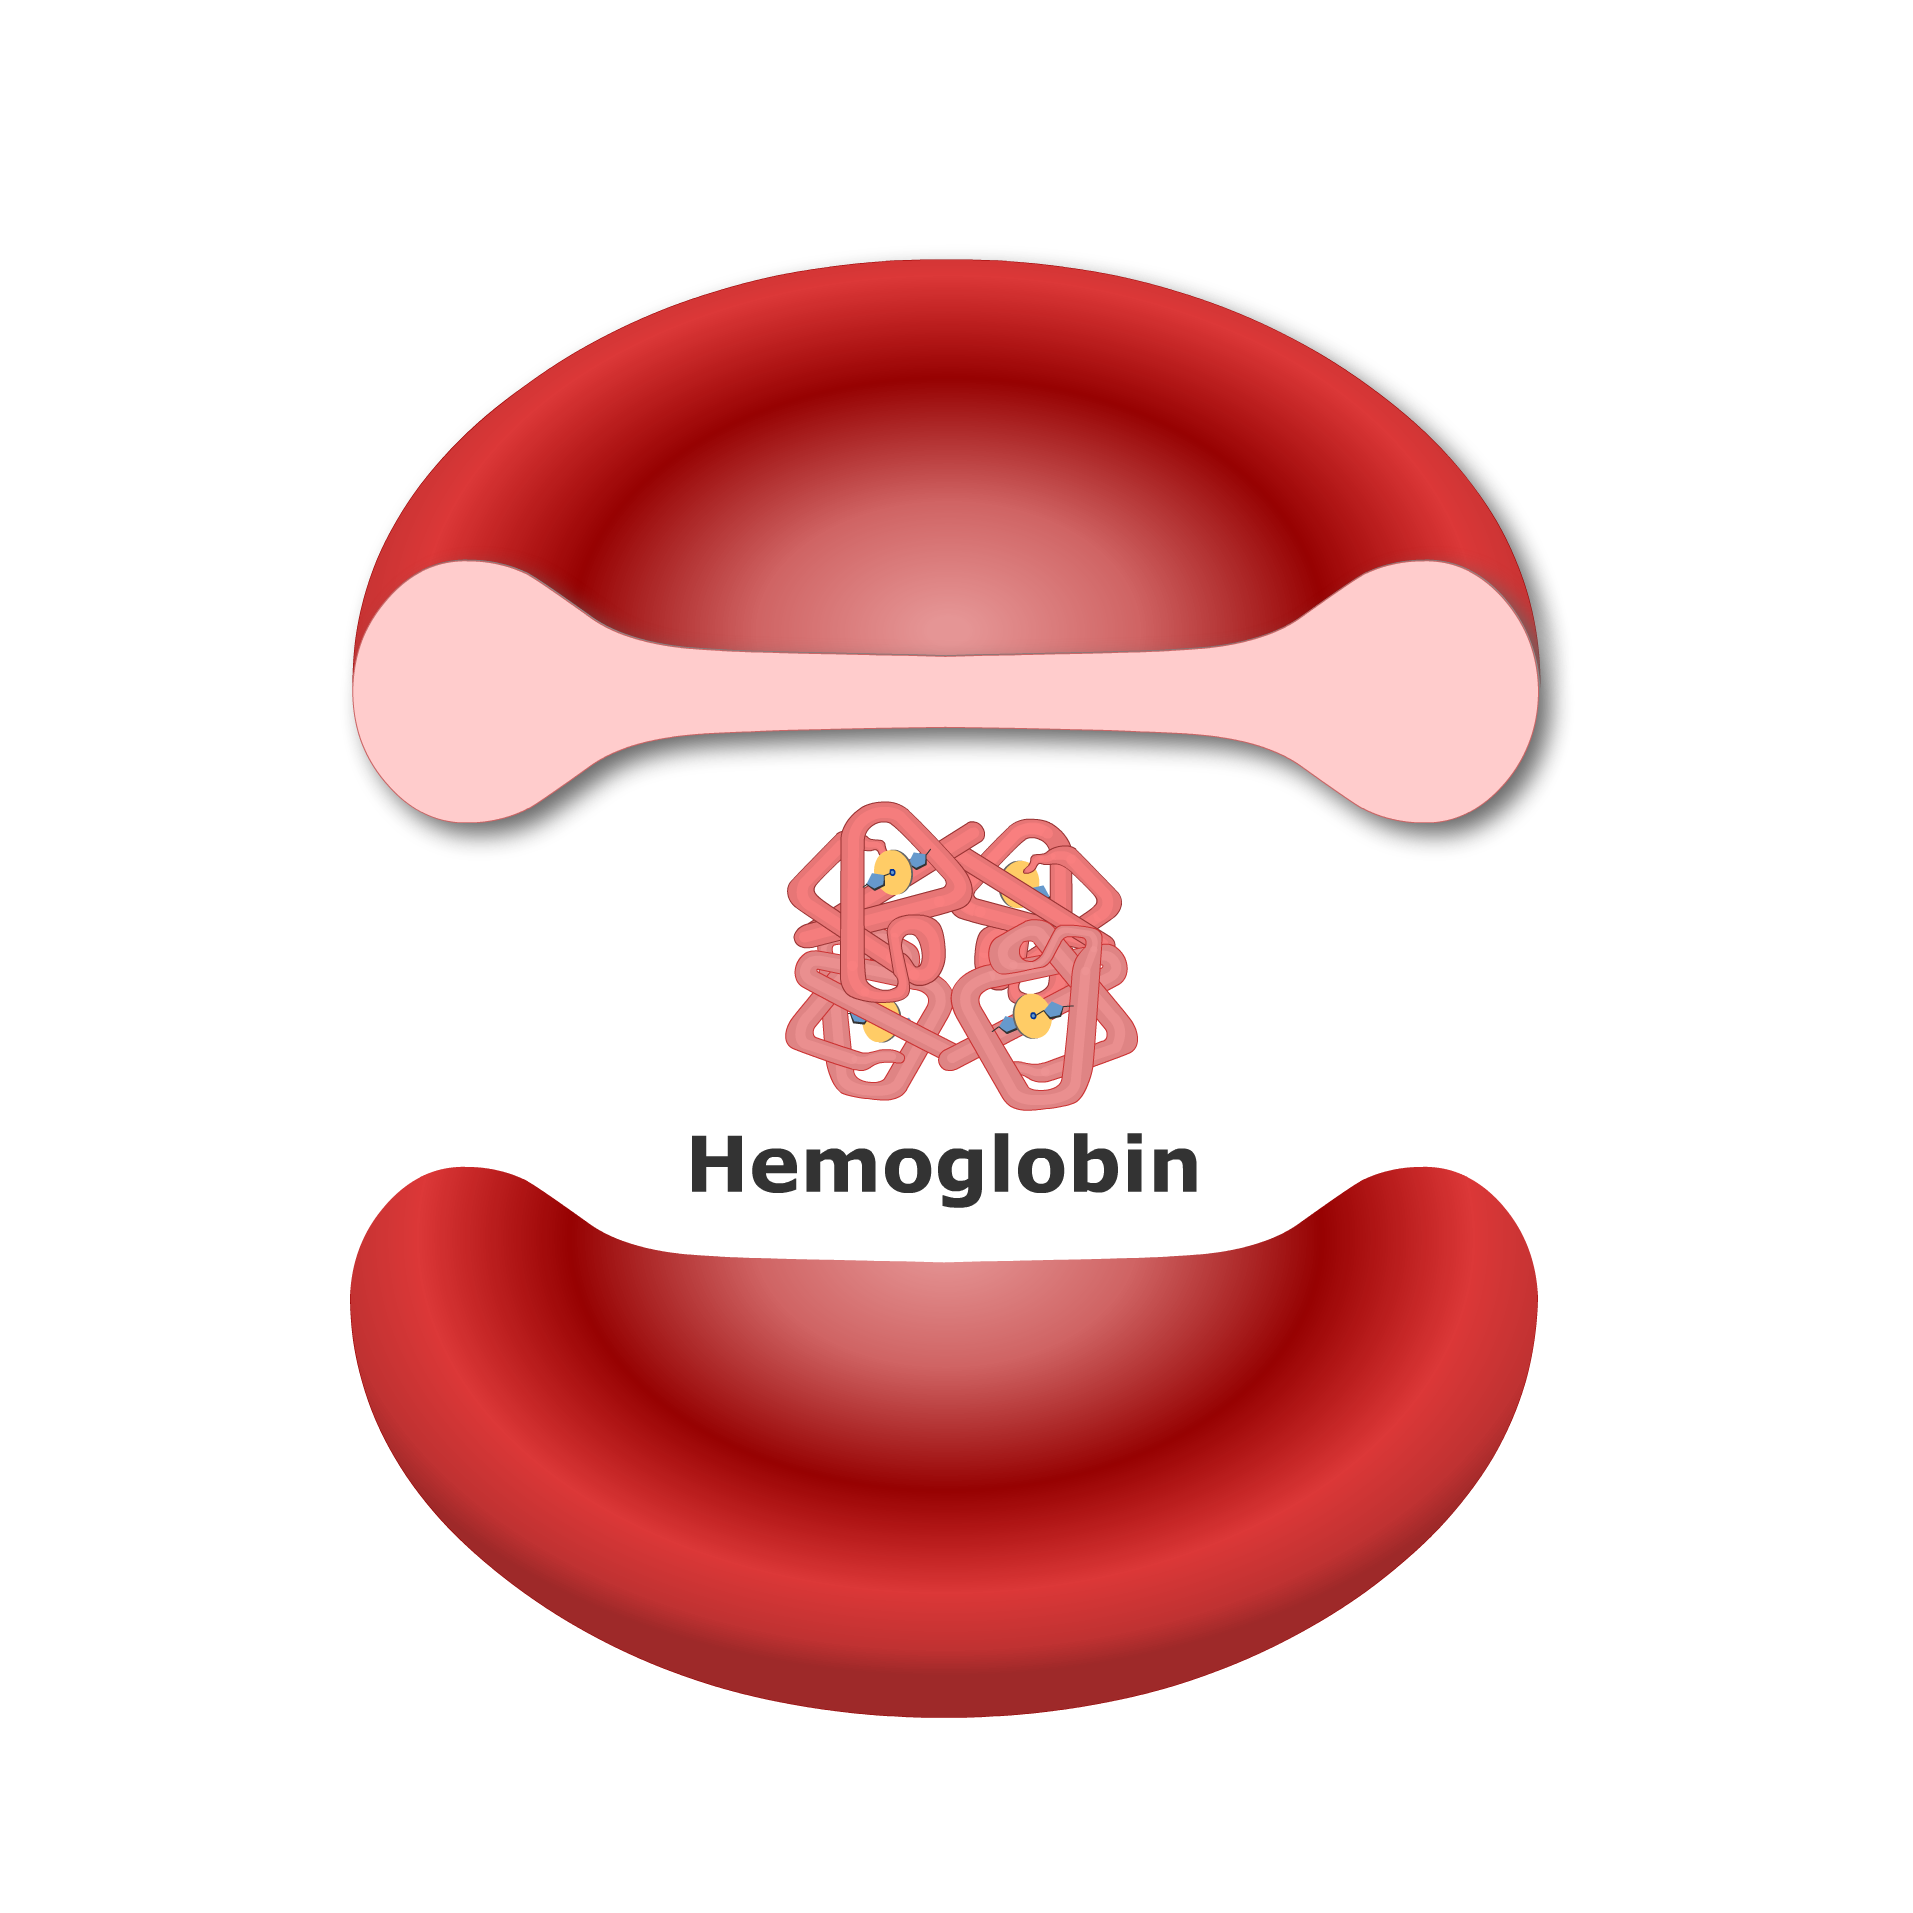 Hemoglobin: Function, Structure, Abnormal Levels